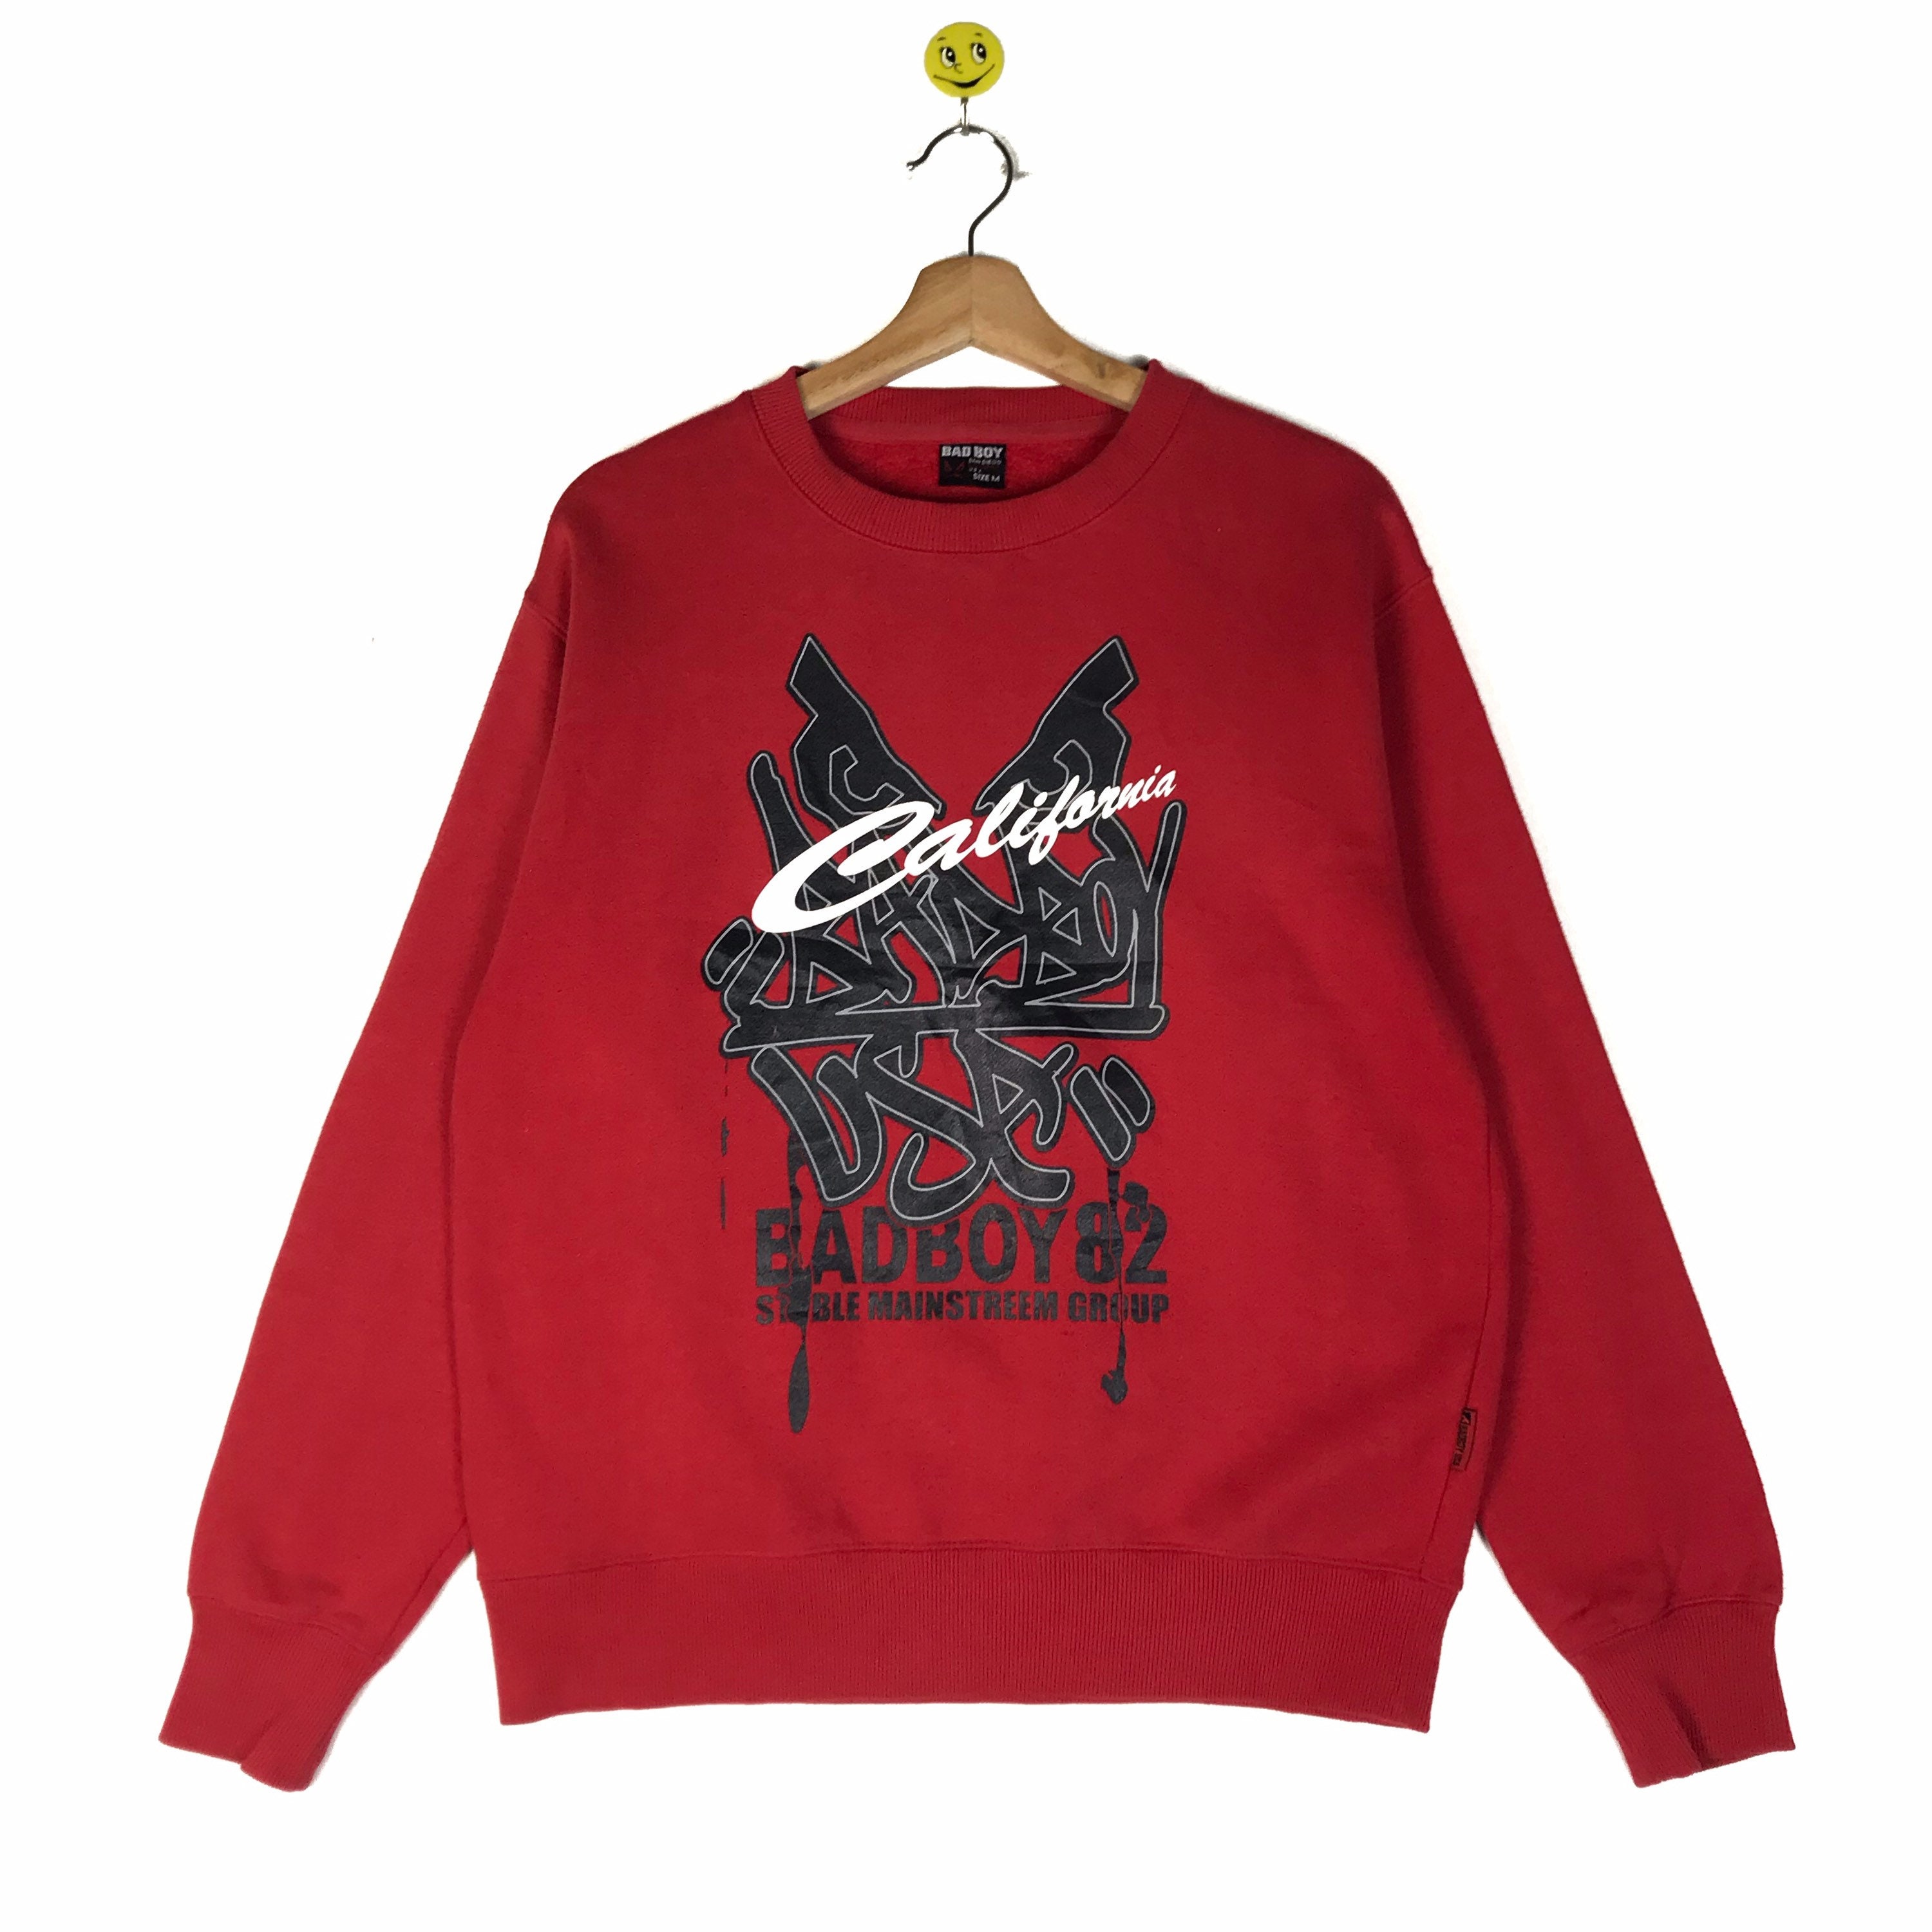 Rare Badboy sweatshirt Badboy pullover Badboy sweater shirt | Etsy